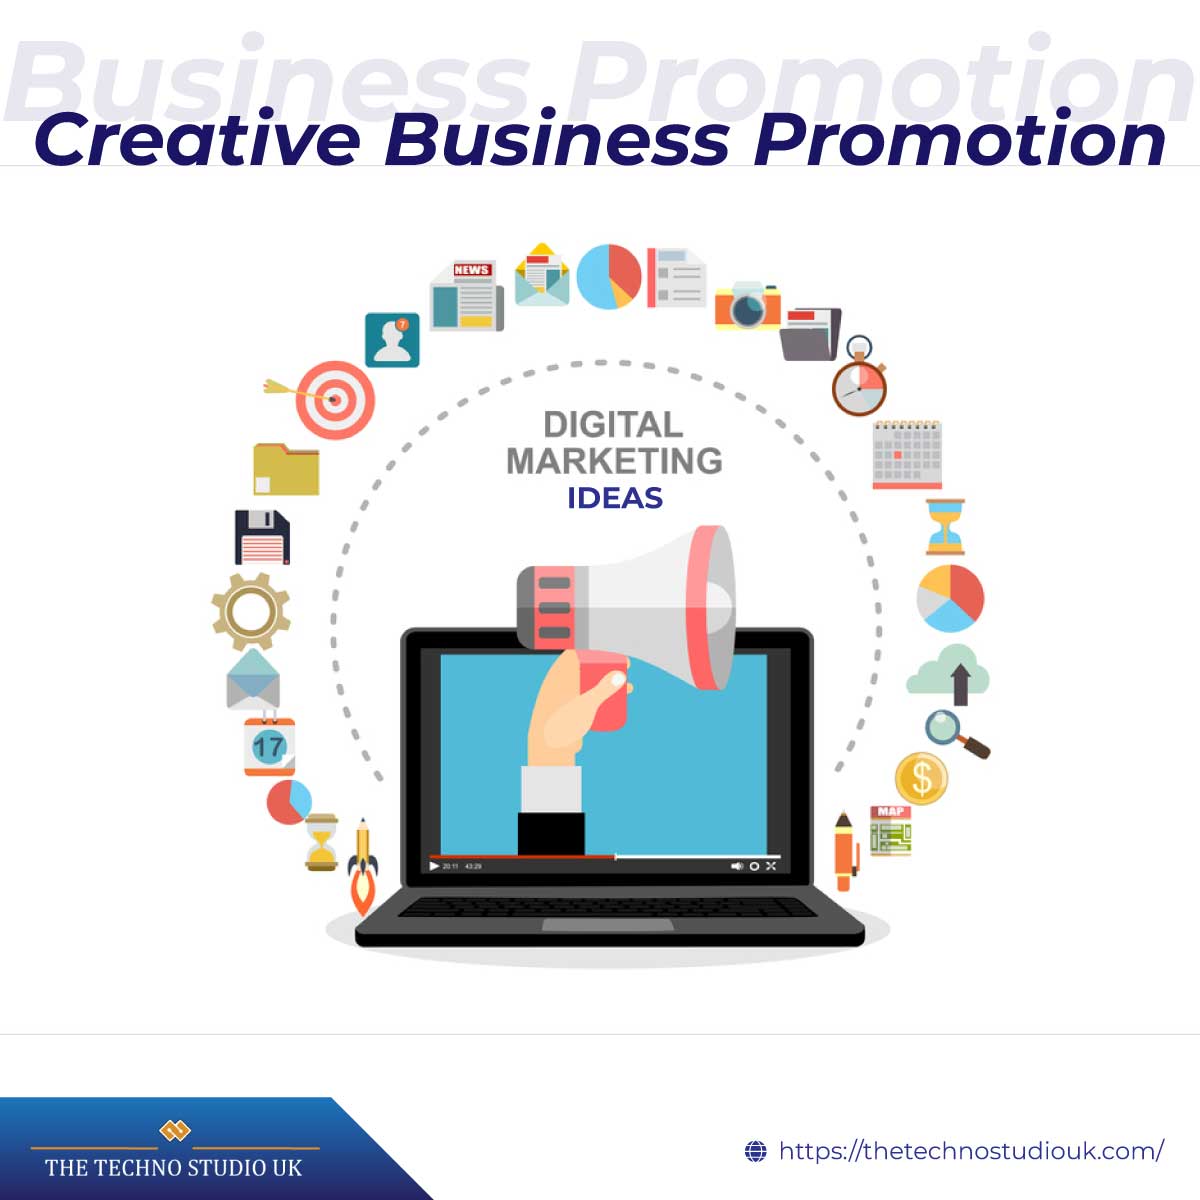 31 Creative Business Promotion Ideas via Digital Marketing in 2023